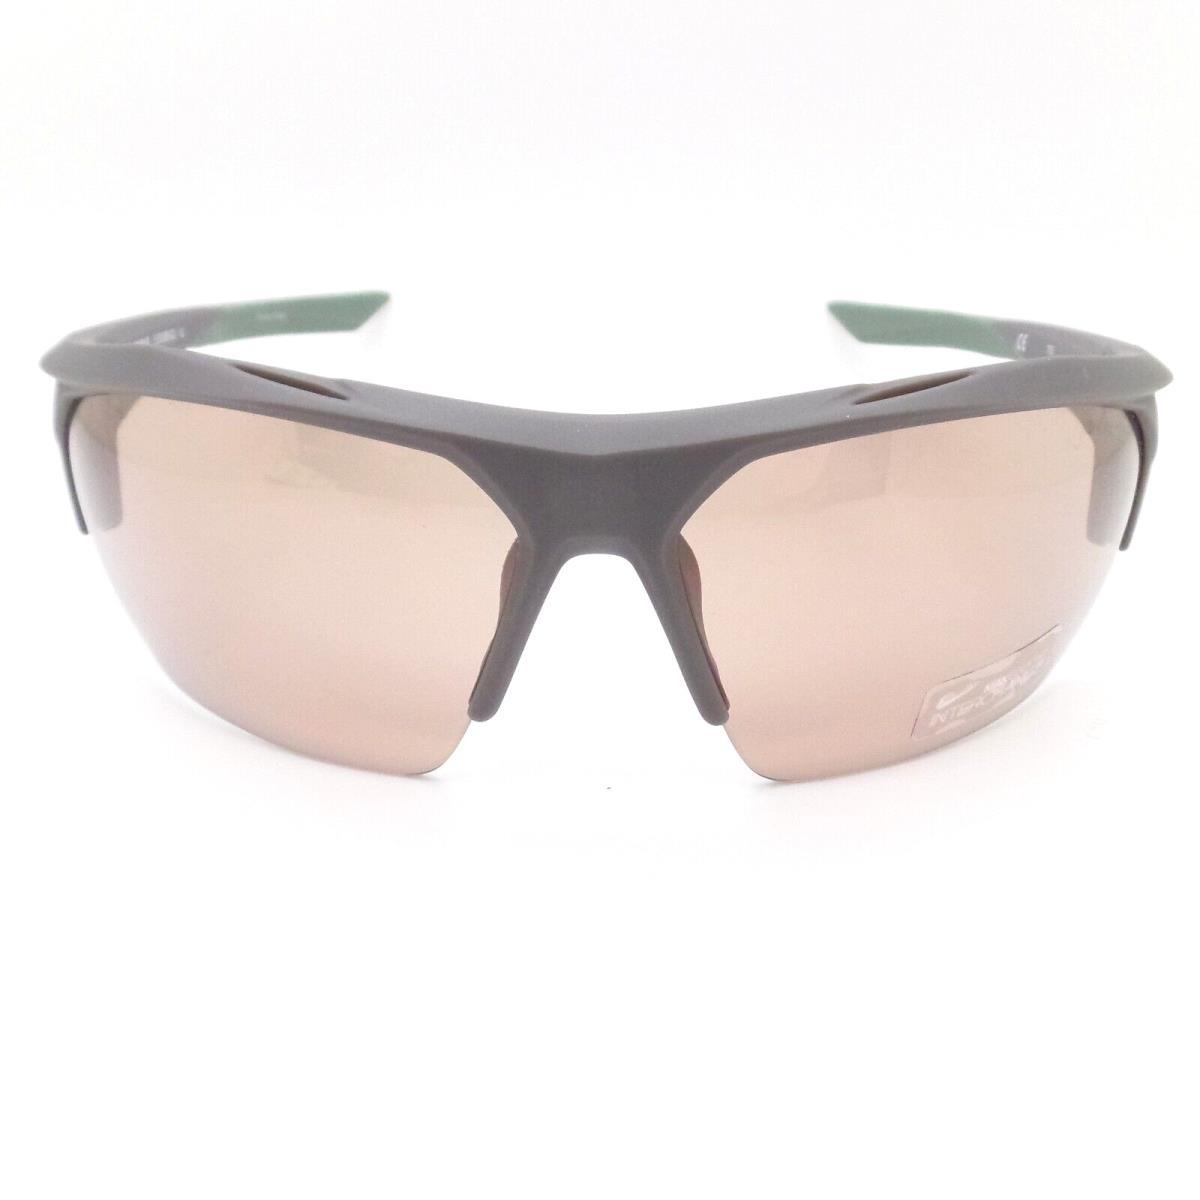 Nike Terminus Matte Dark Grey Course Electric Mirror Sunglasses - Frame: Matte Dark Grey, Lens: